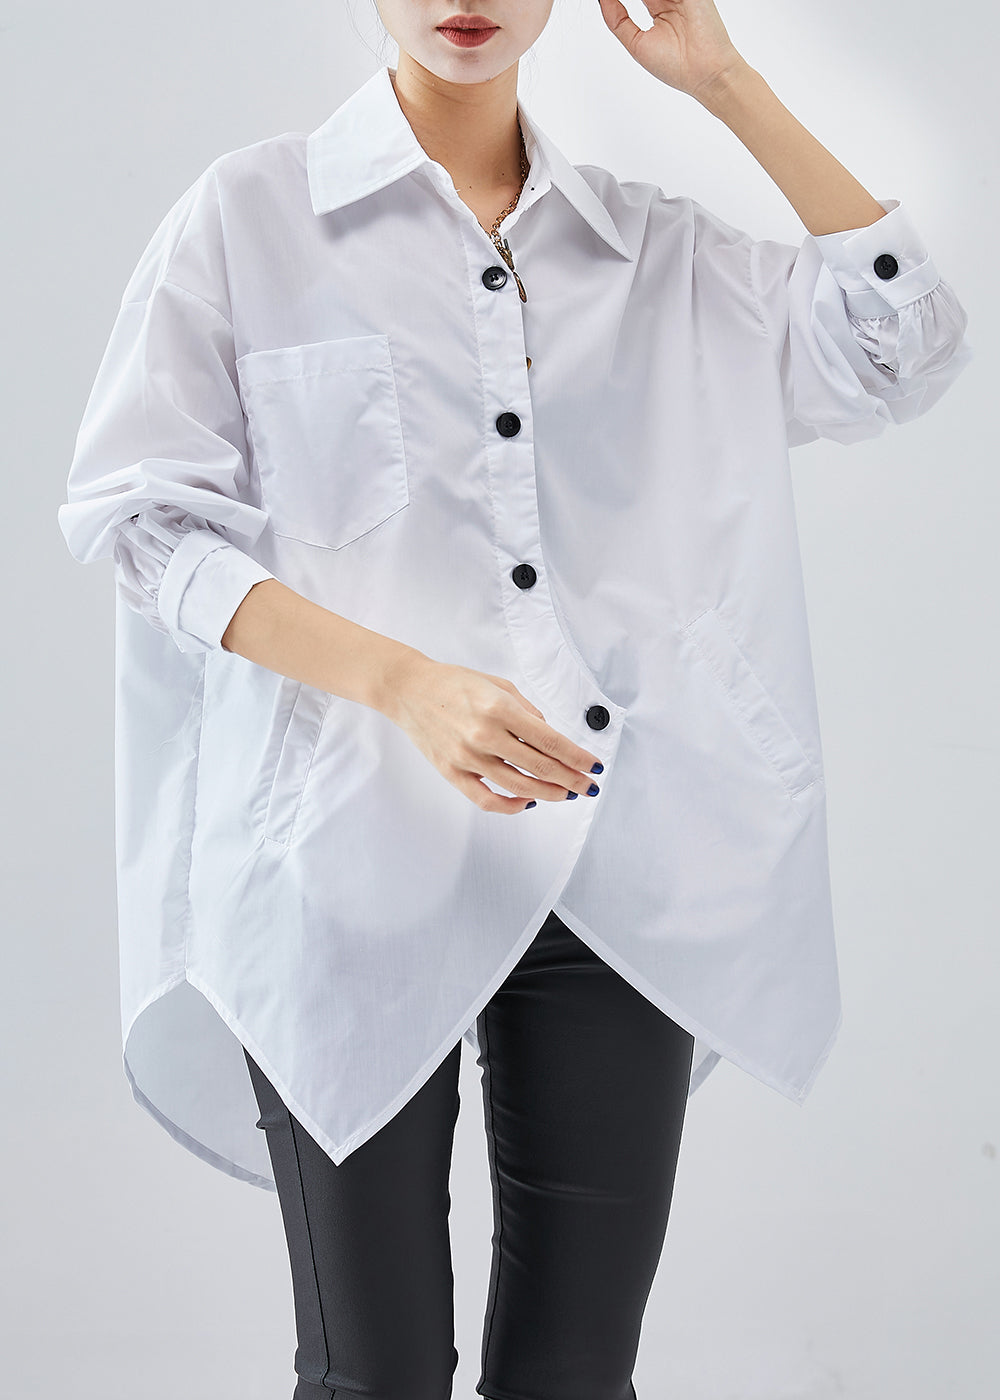 French White Asymmetrical Design Cotton Shirts Fall